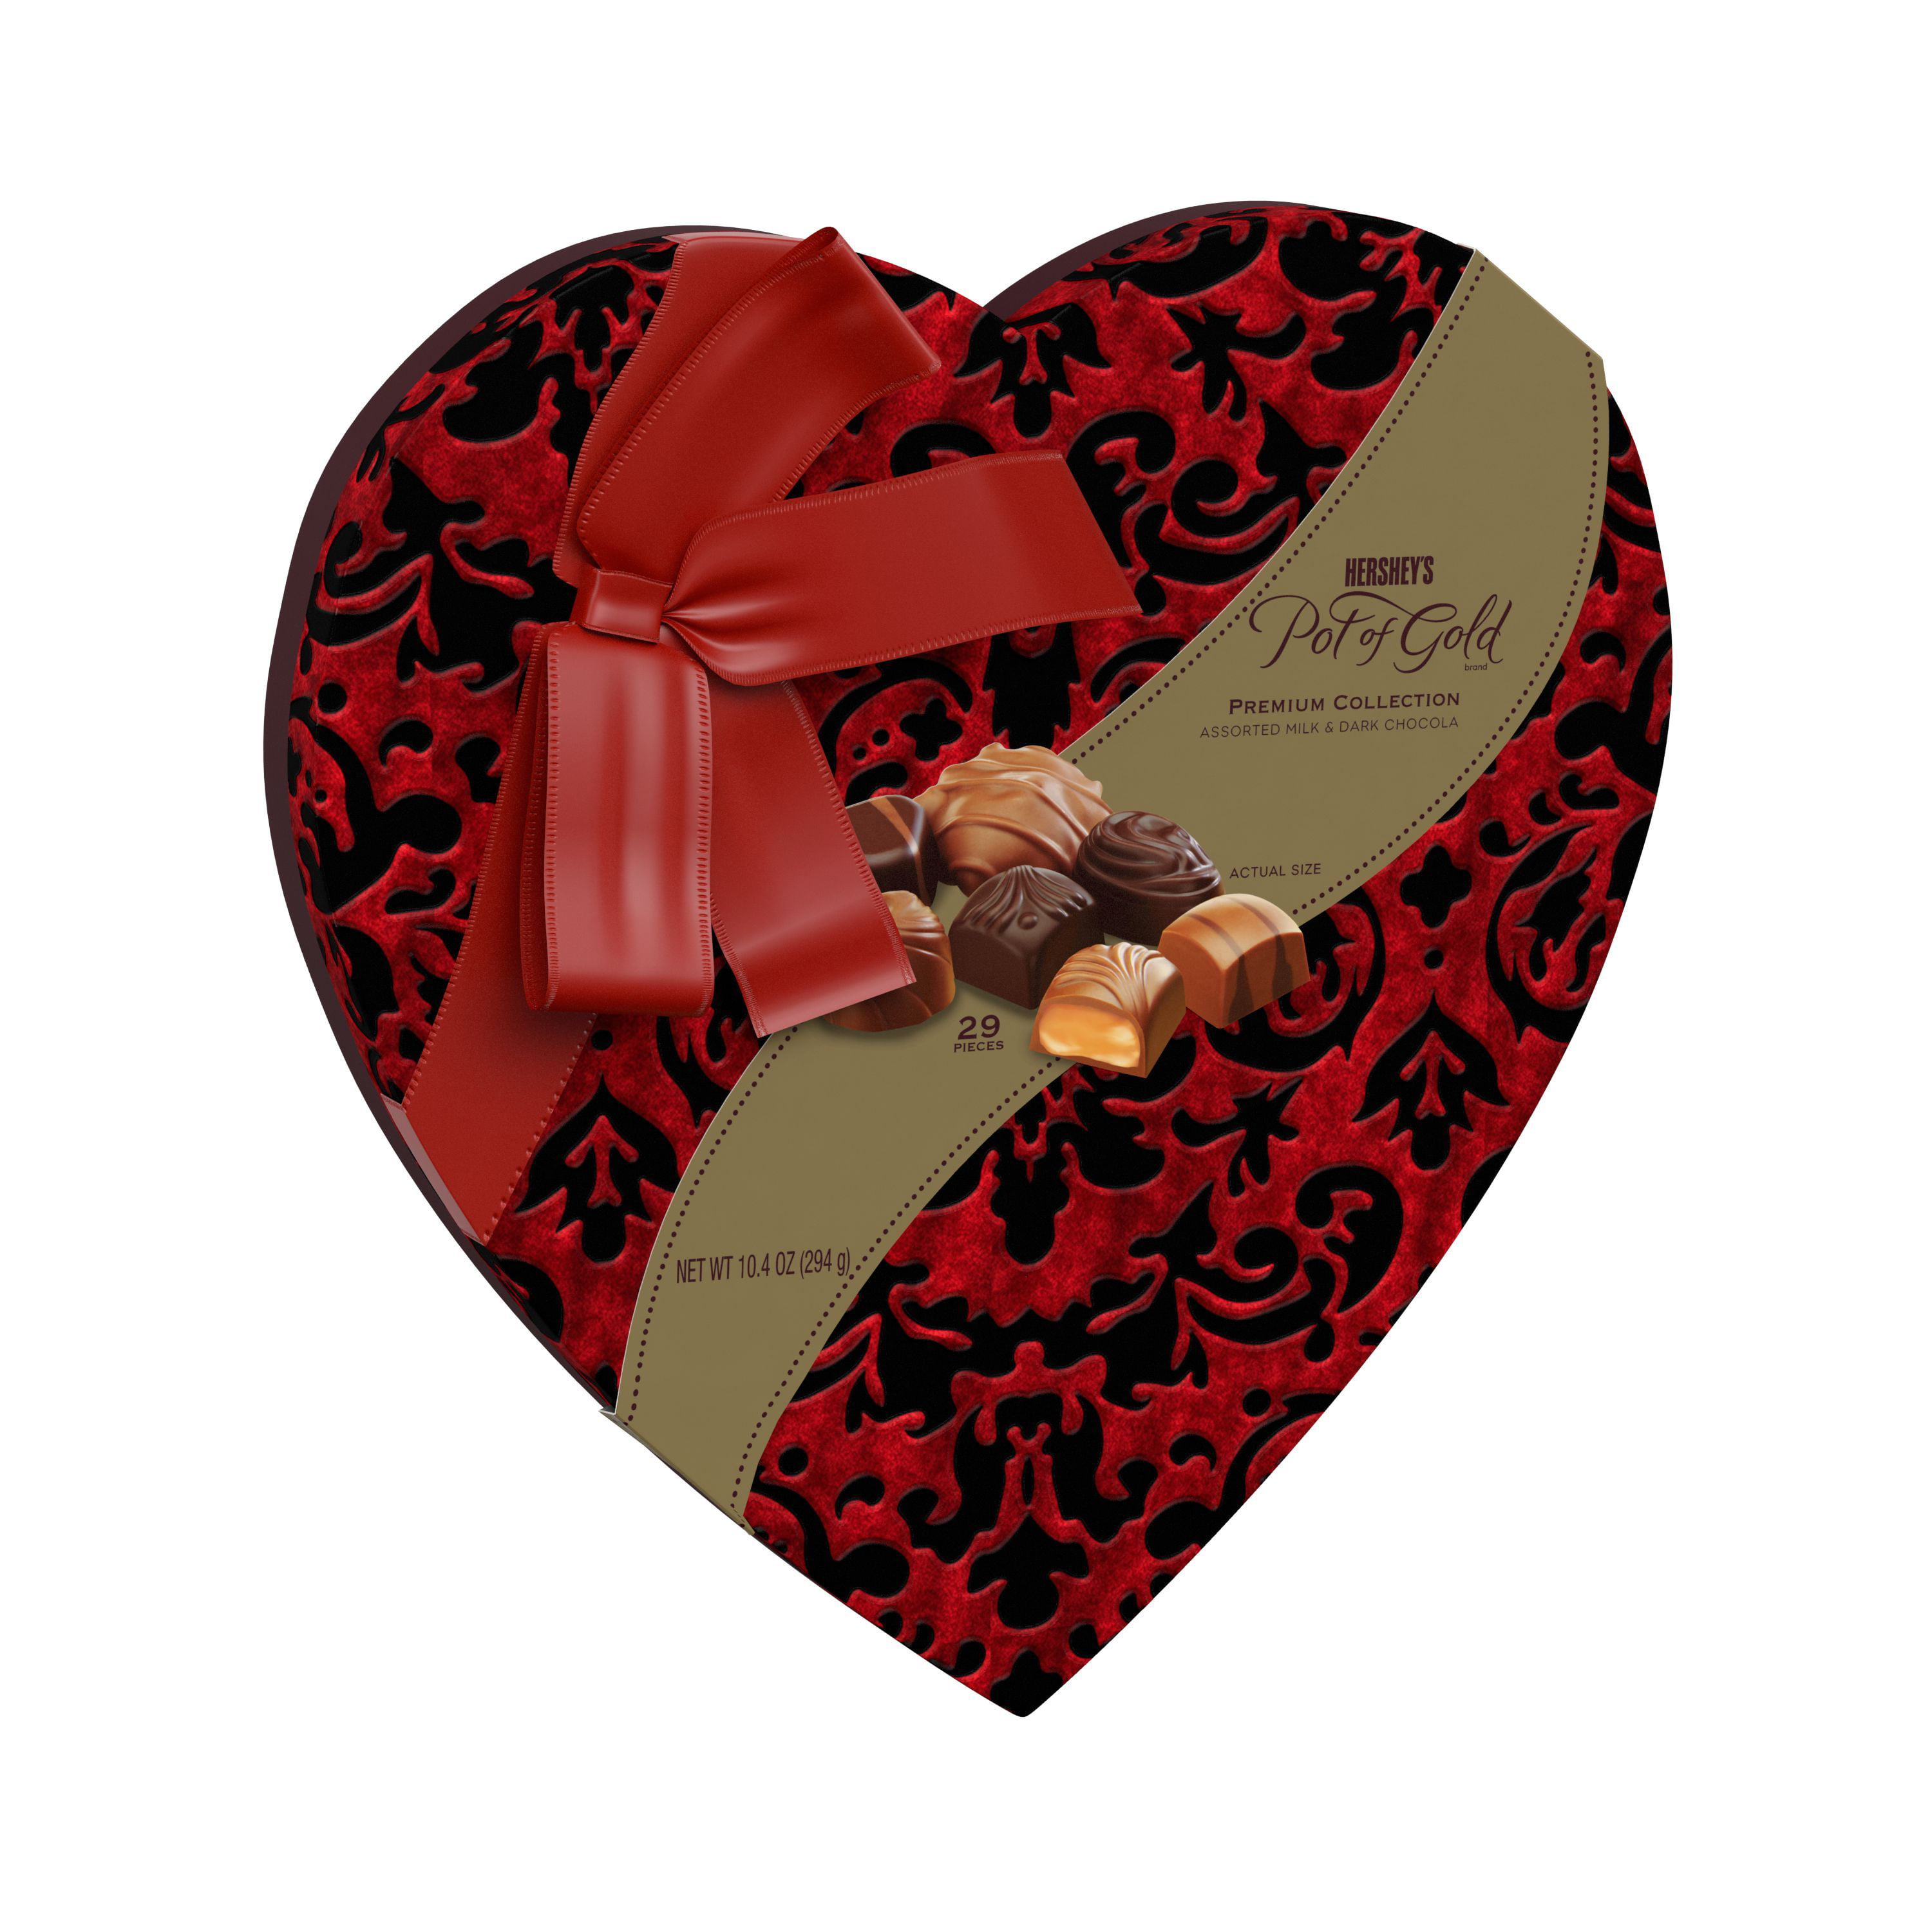 Heart Shaped Chocolate Box with various chocolates Felt Plush Creation ~Hand-sewn with love